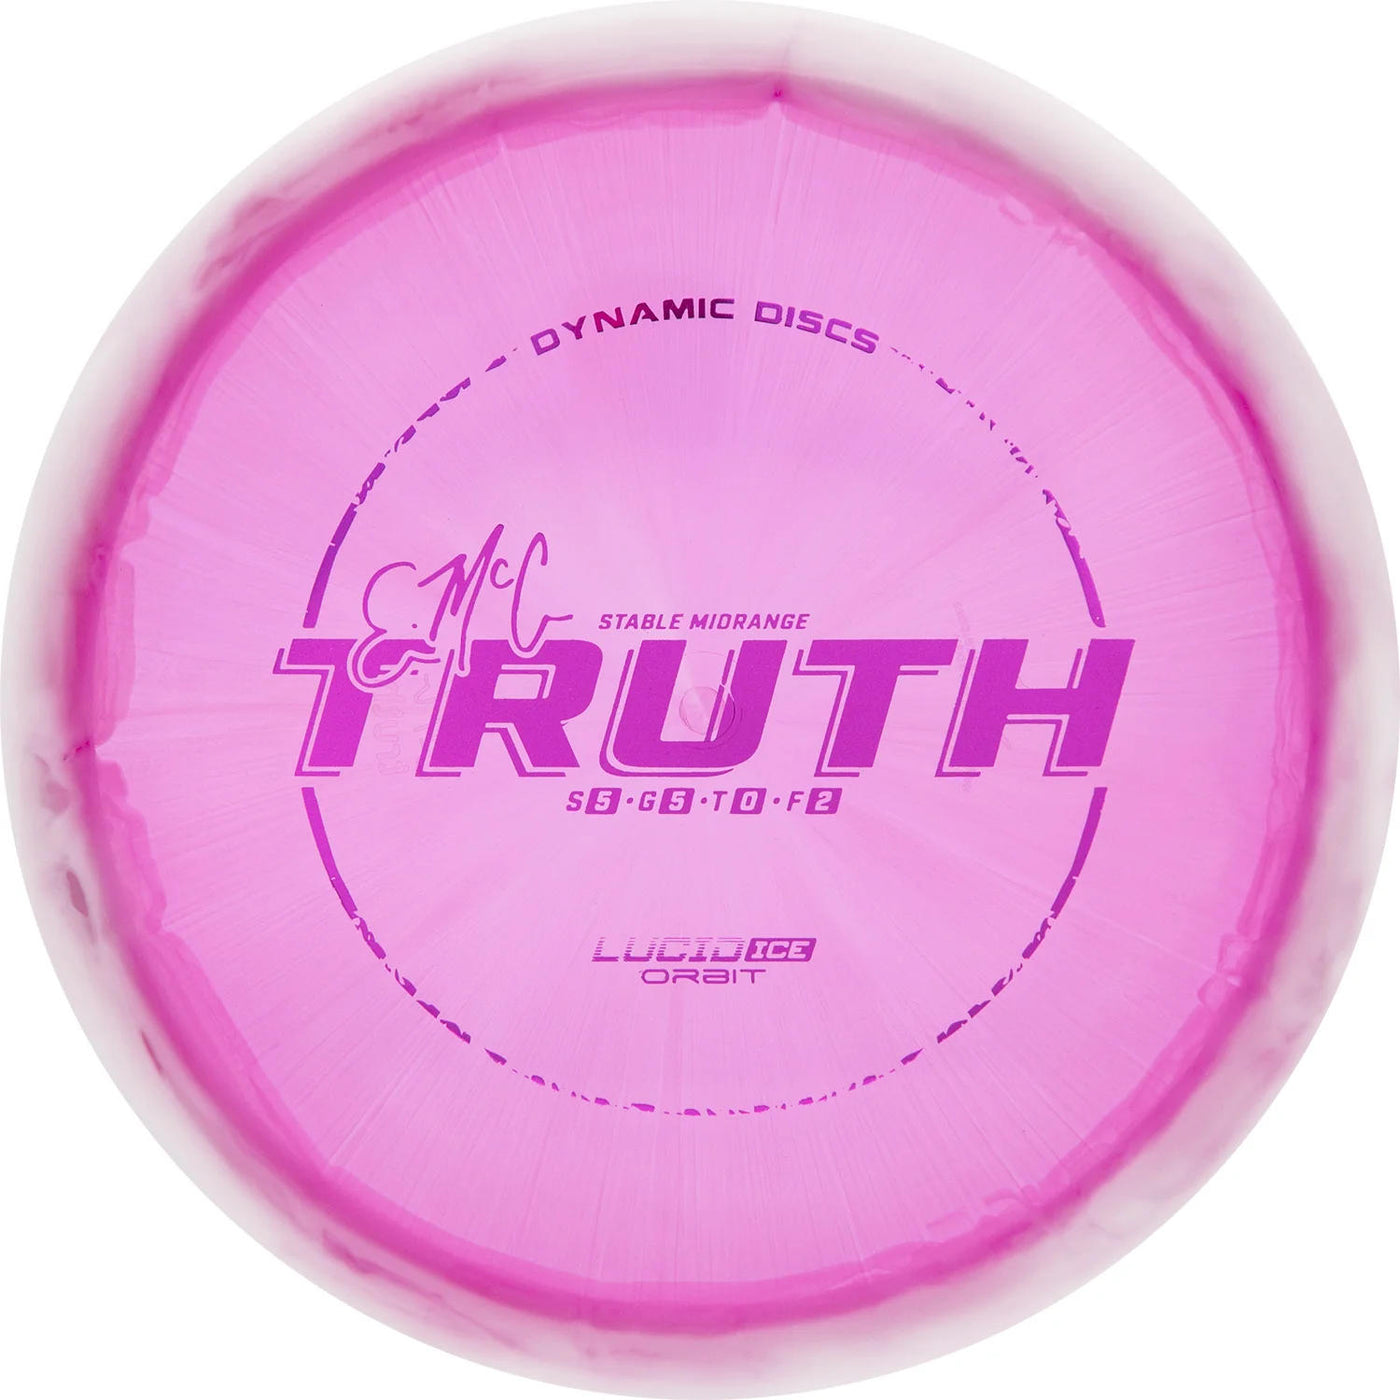 Dynamic Discs Lucid Ice Orbit EMAC Truth Midrange - Speed 5